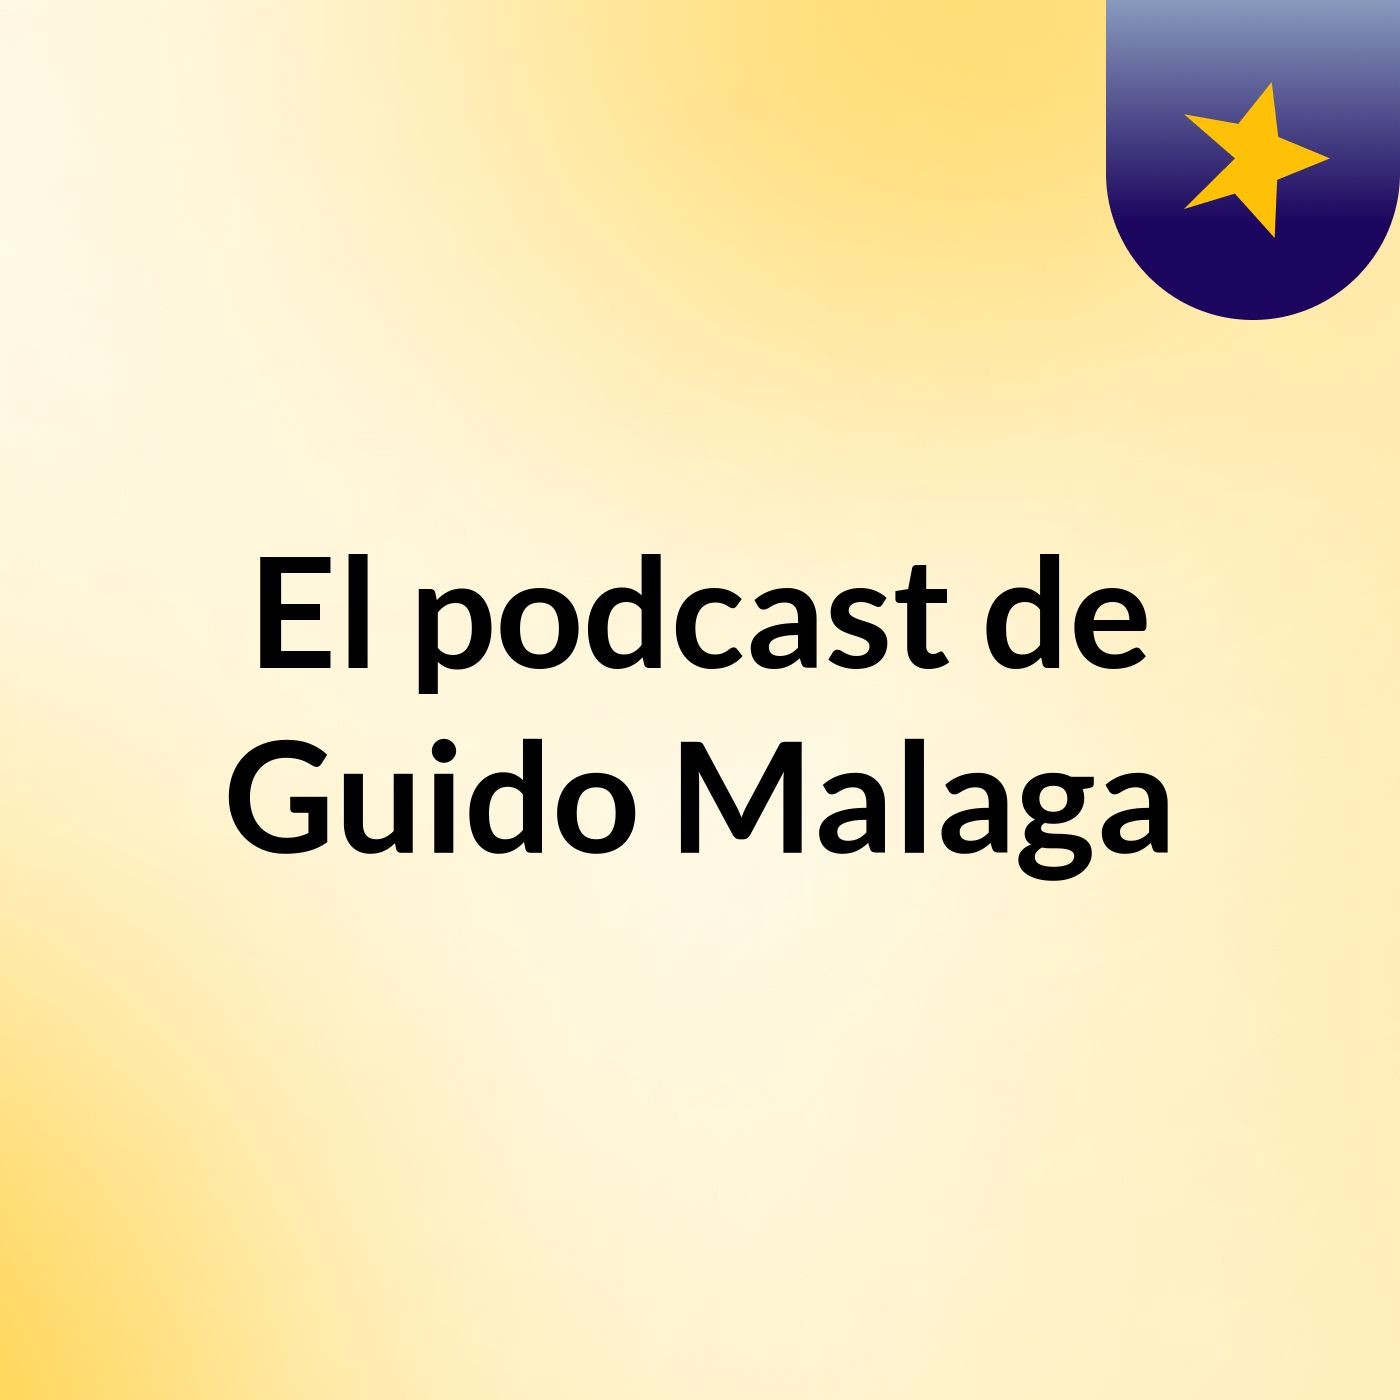 El podcast de Guido Malaga